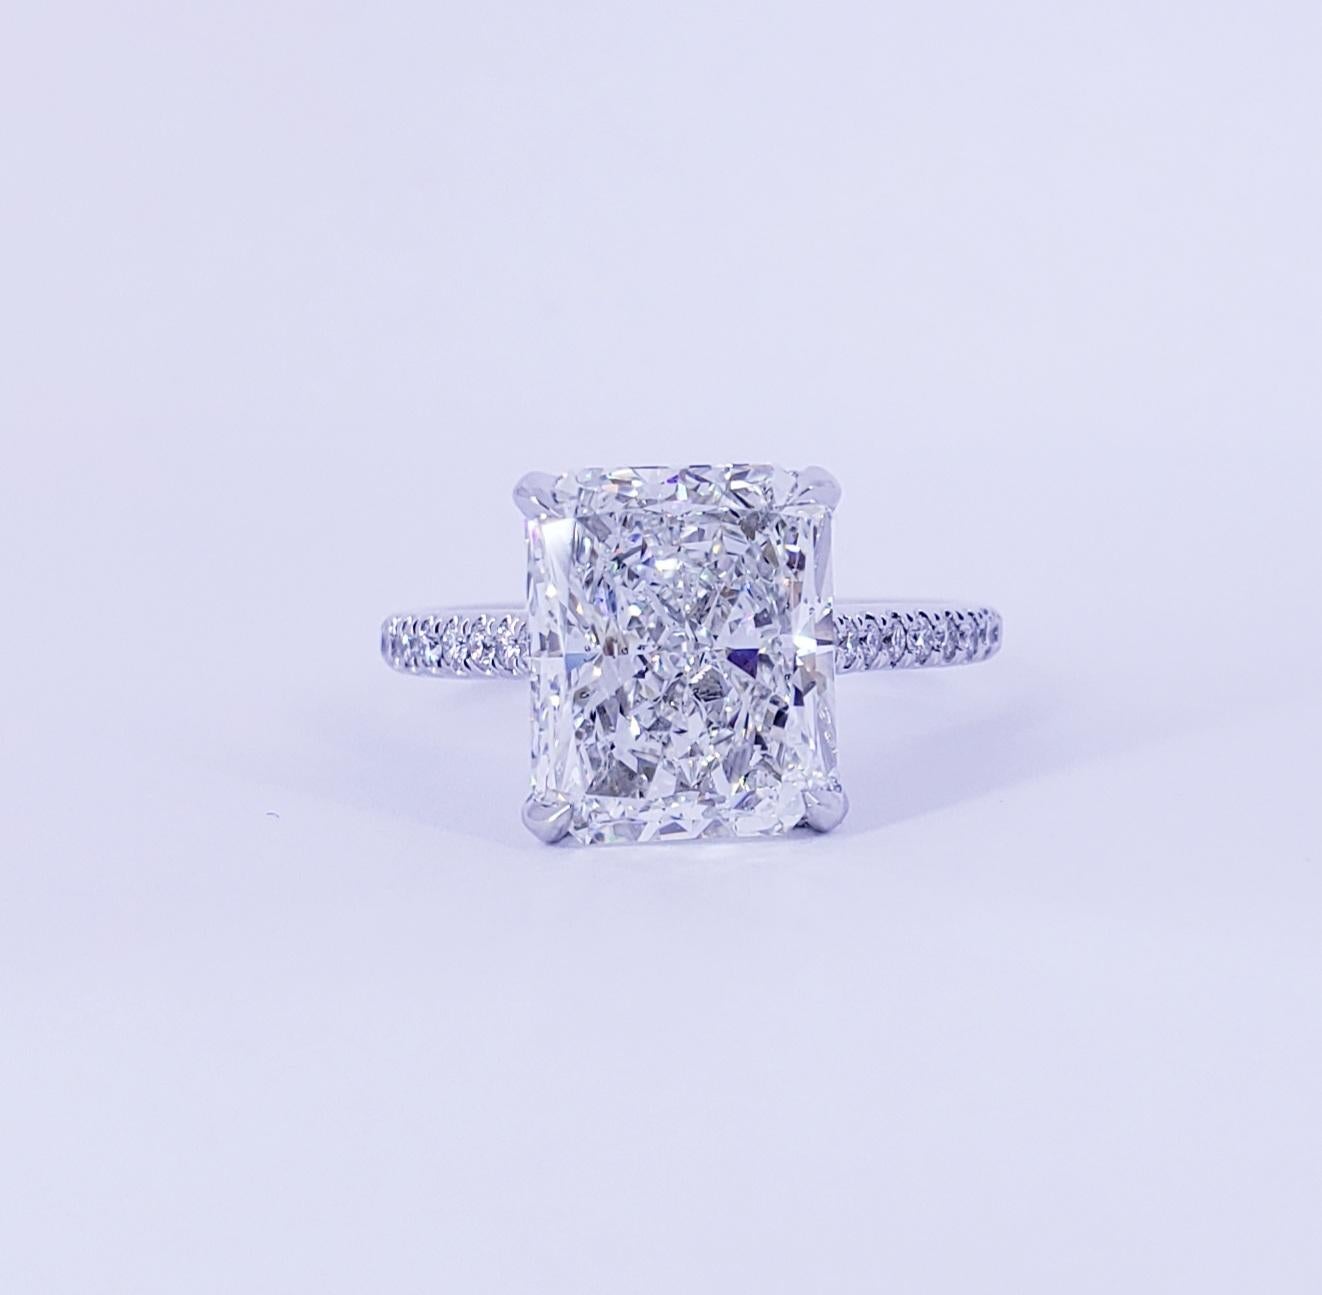 David Rosenberg 5.02 Carat Radiant Cut GIA Diamond Wedding Engagement Ring For Sale 2